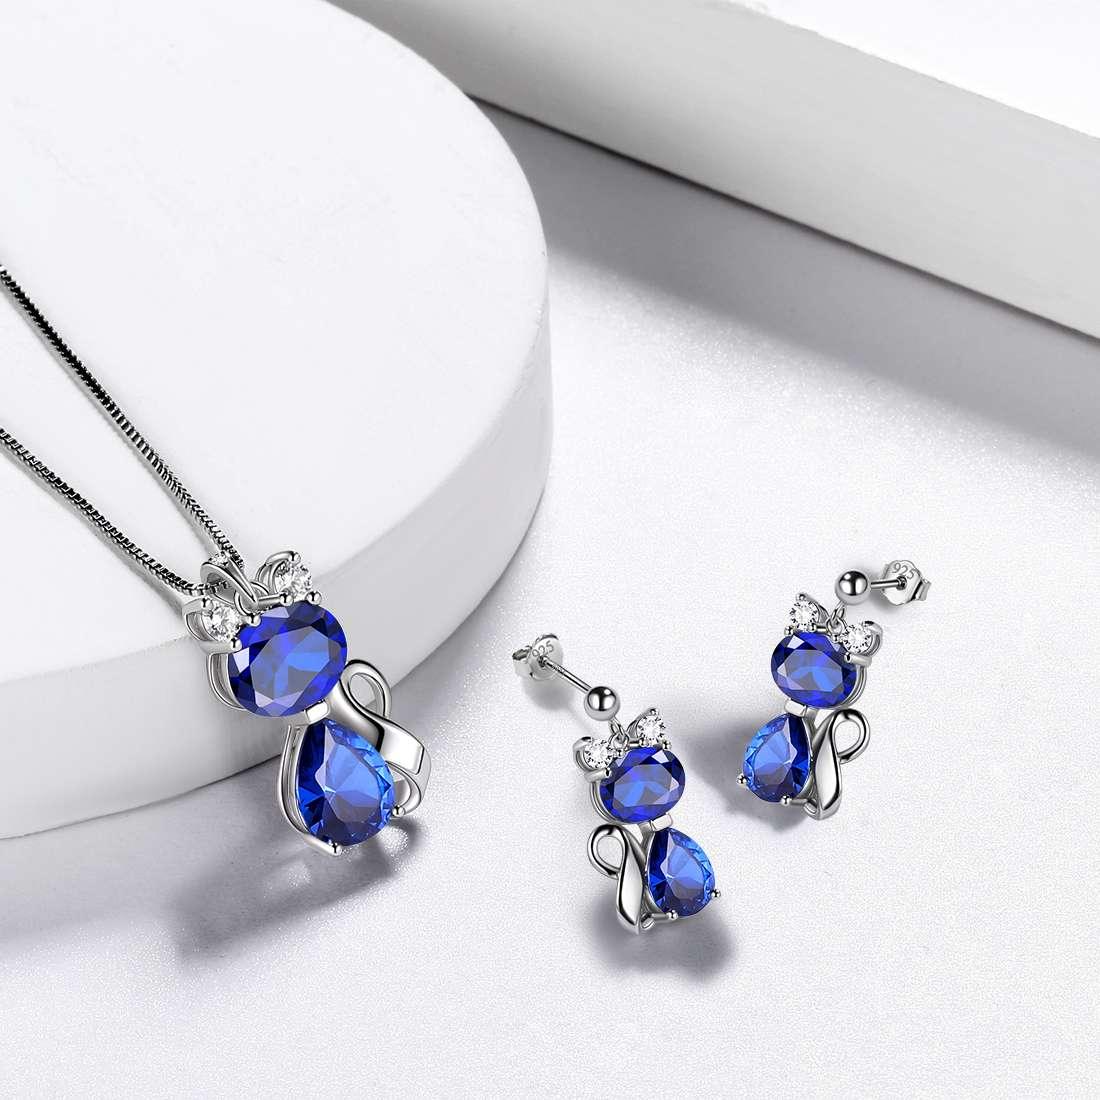 Cats Necklace Earrings Jewelry Blue September Birthstone - Jewelry Set - Aurora Tears Jewelry